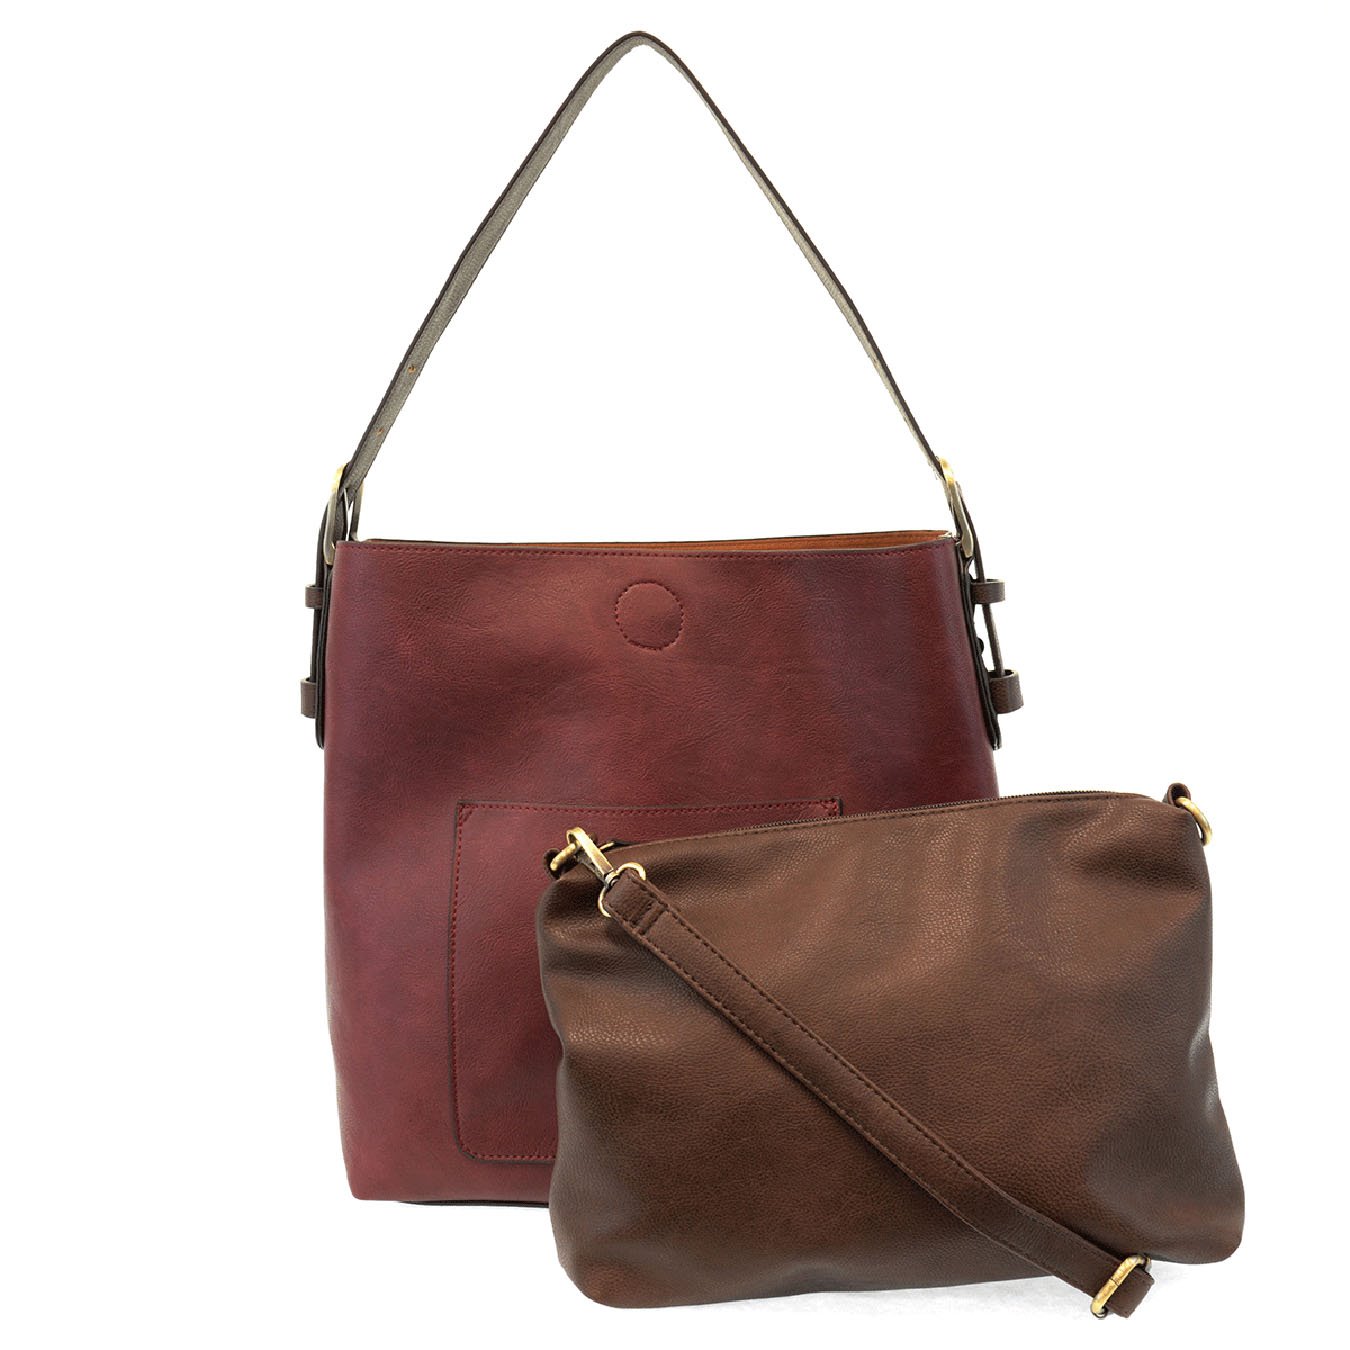 100% Vegan Leather Handbags by Joy Susan at P. C. Fallon Co.